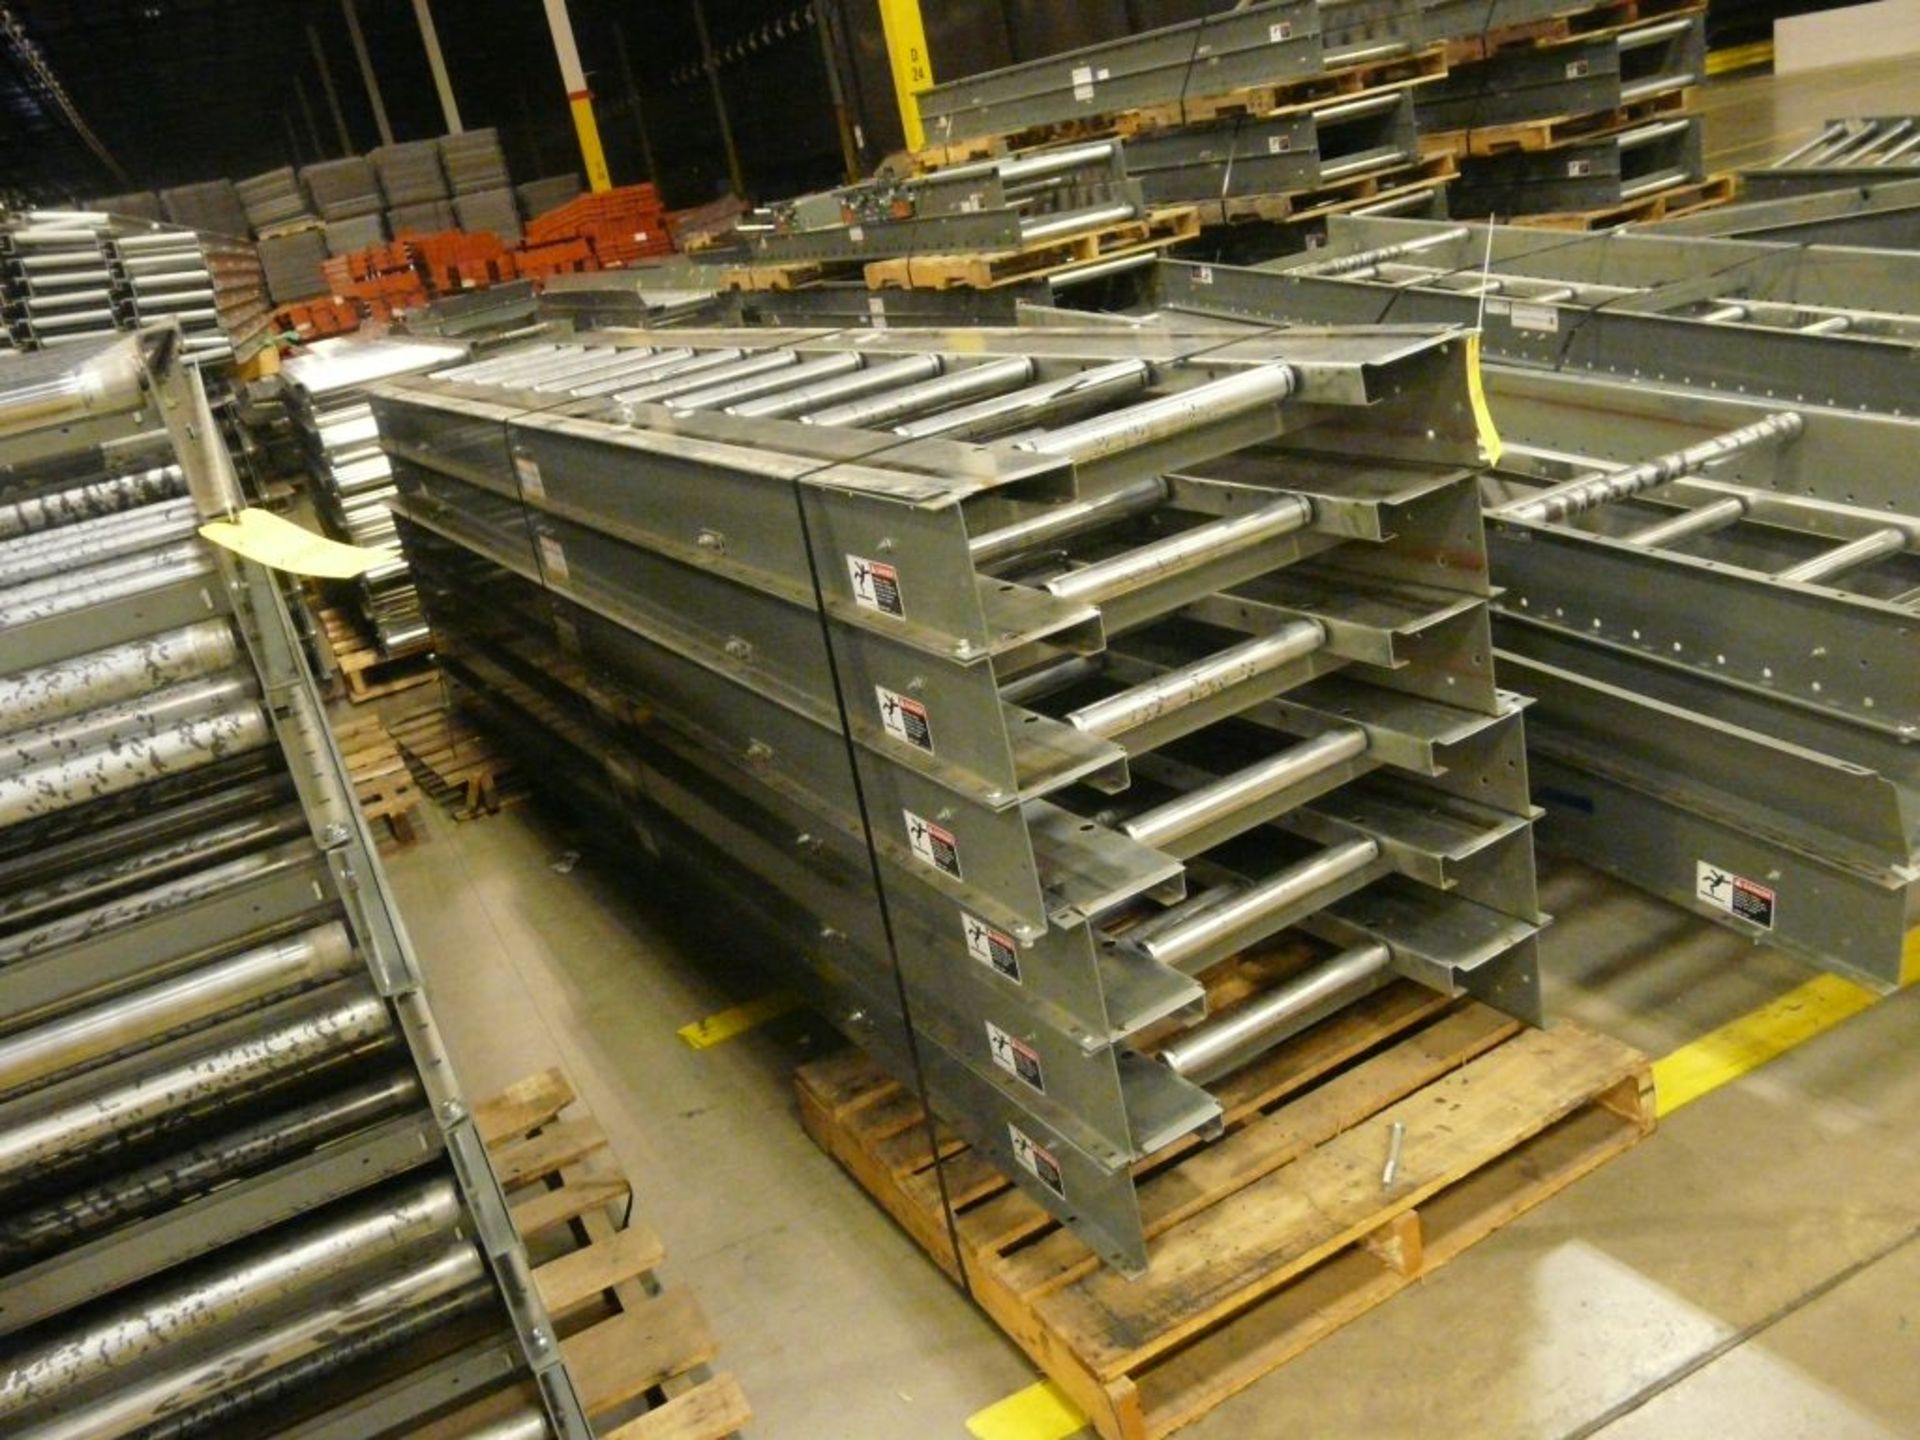 Lot of (6) 200 Belt Intermediate Conveyors - 12'L x 28"W; Tag: 223703 - $30 Lot Loading Fee - Image 2 of 4